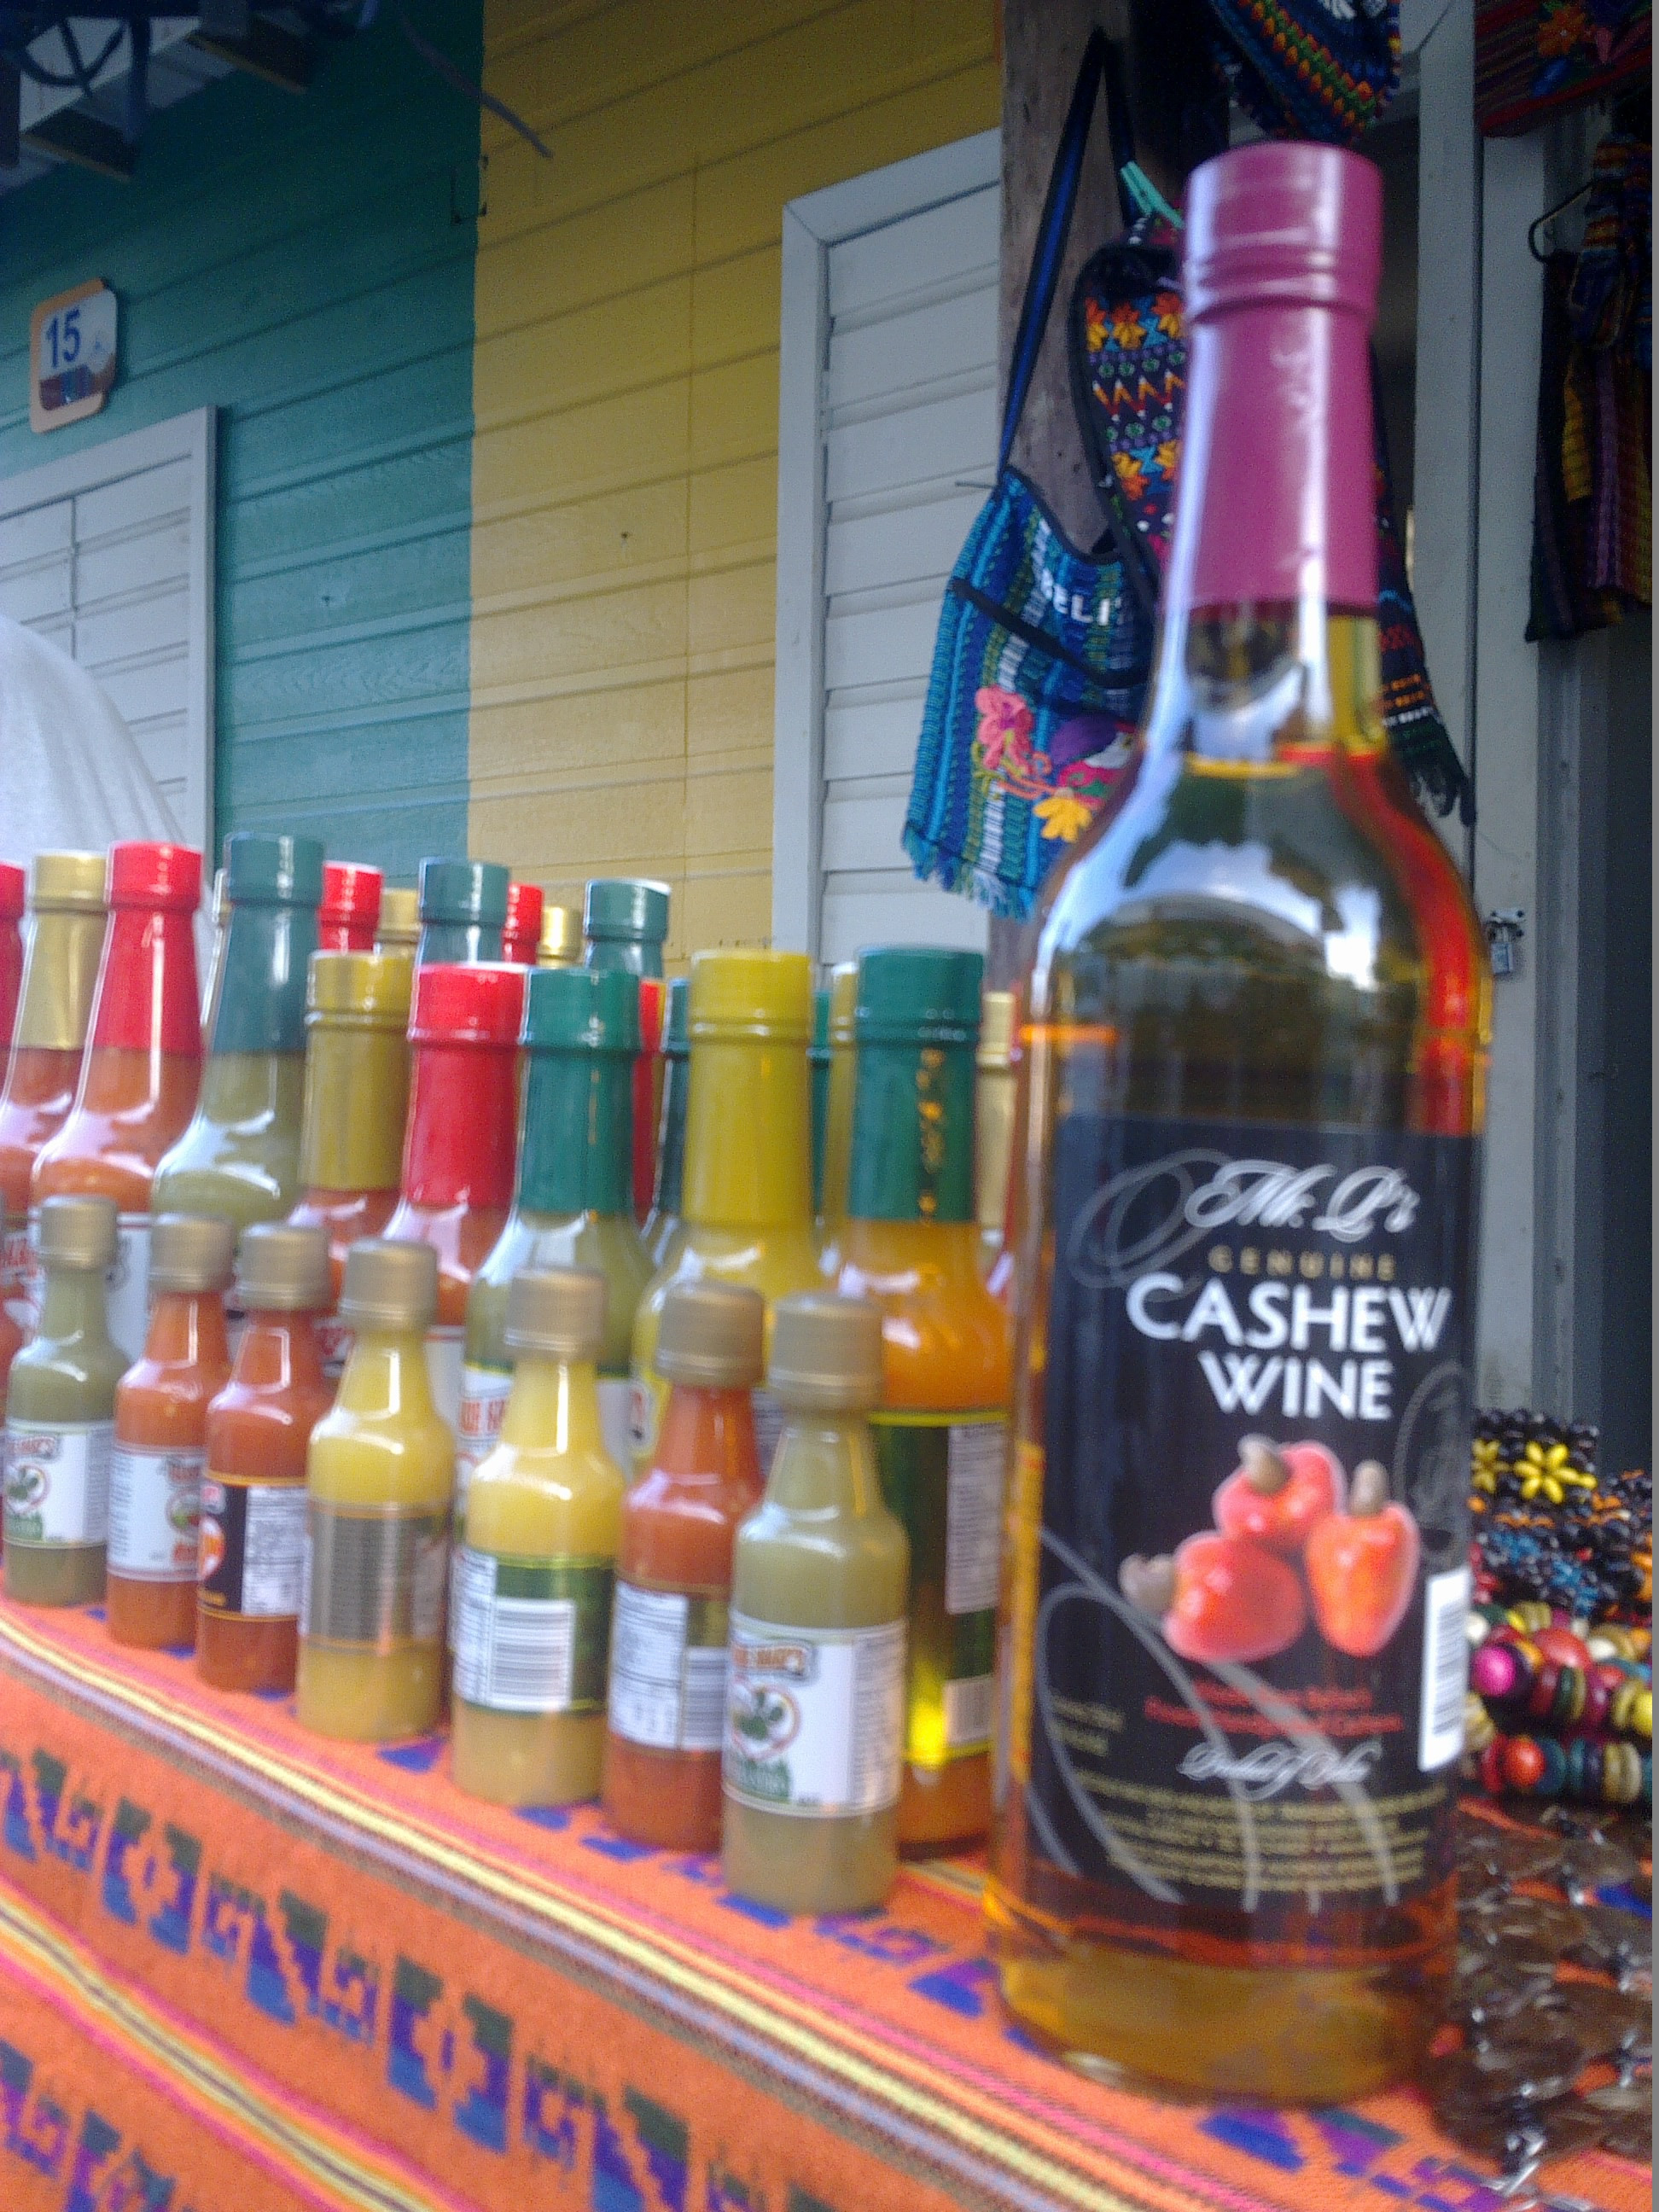 Cashew wine (Belize City)